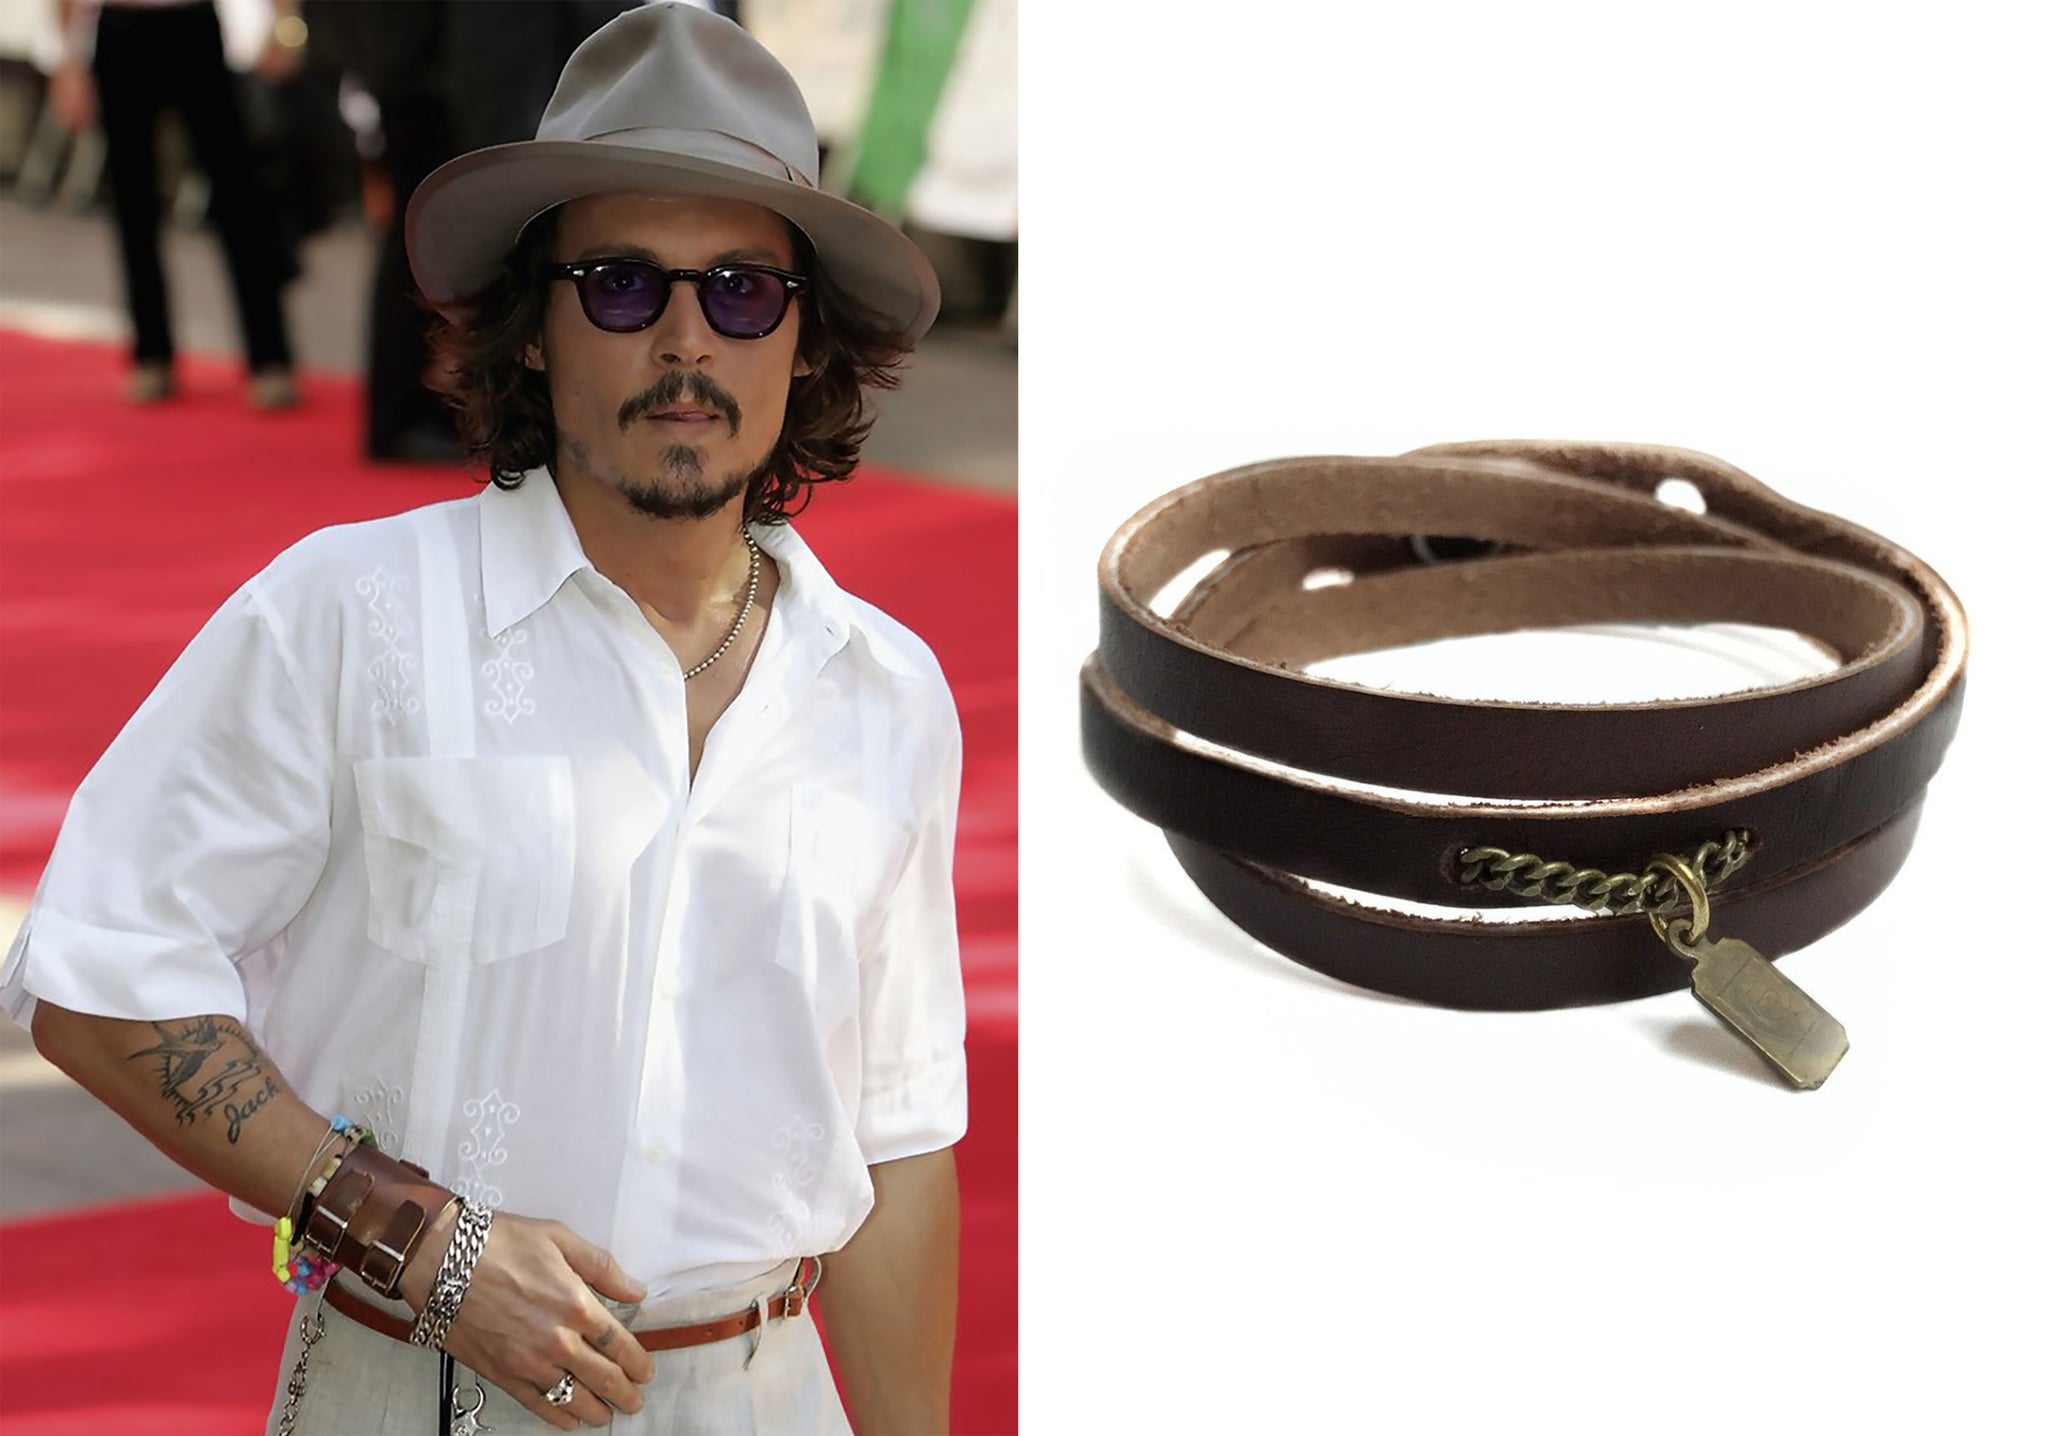 Leather Bracelet worn by Johnny Depp